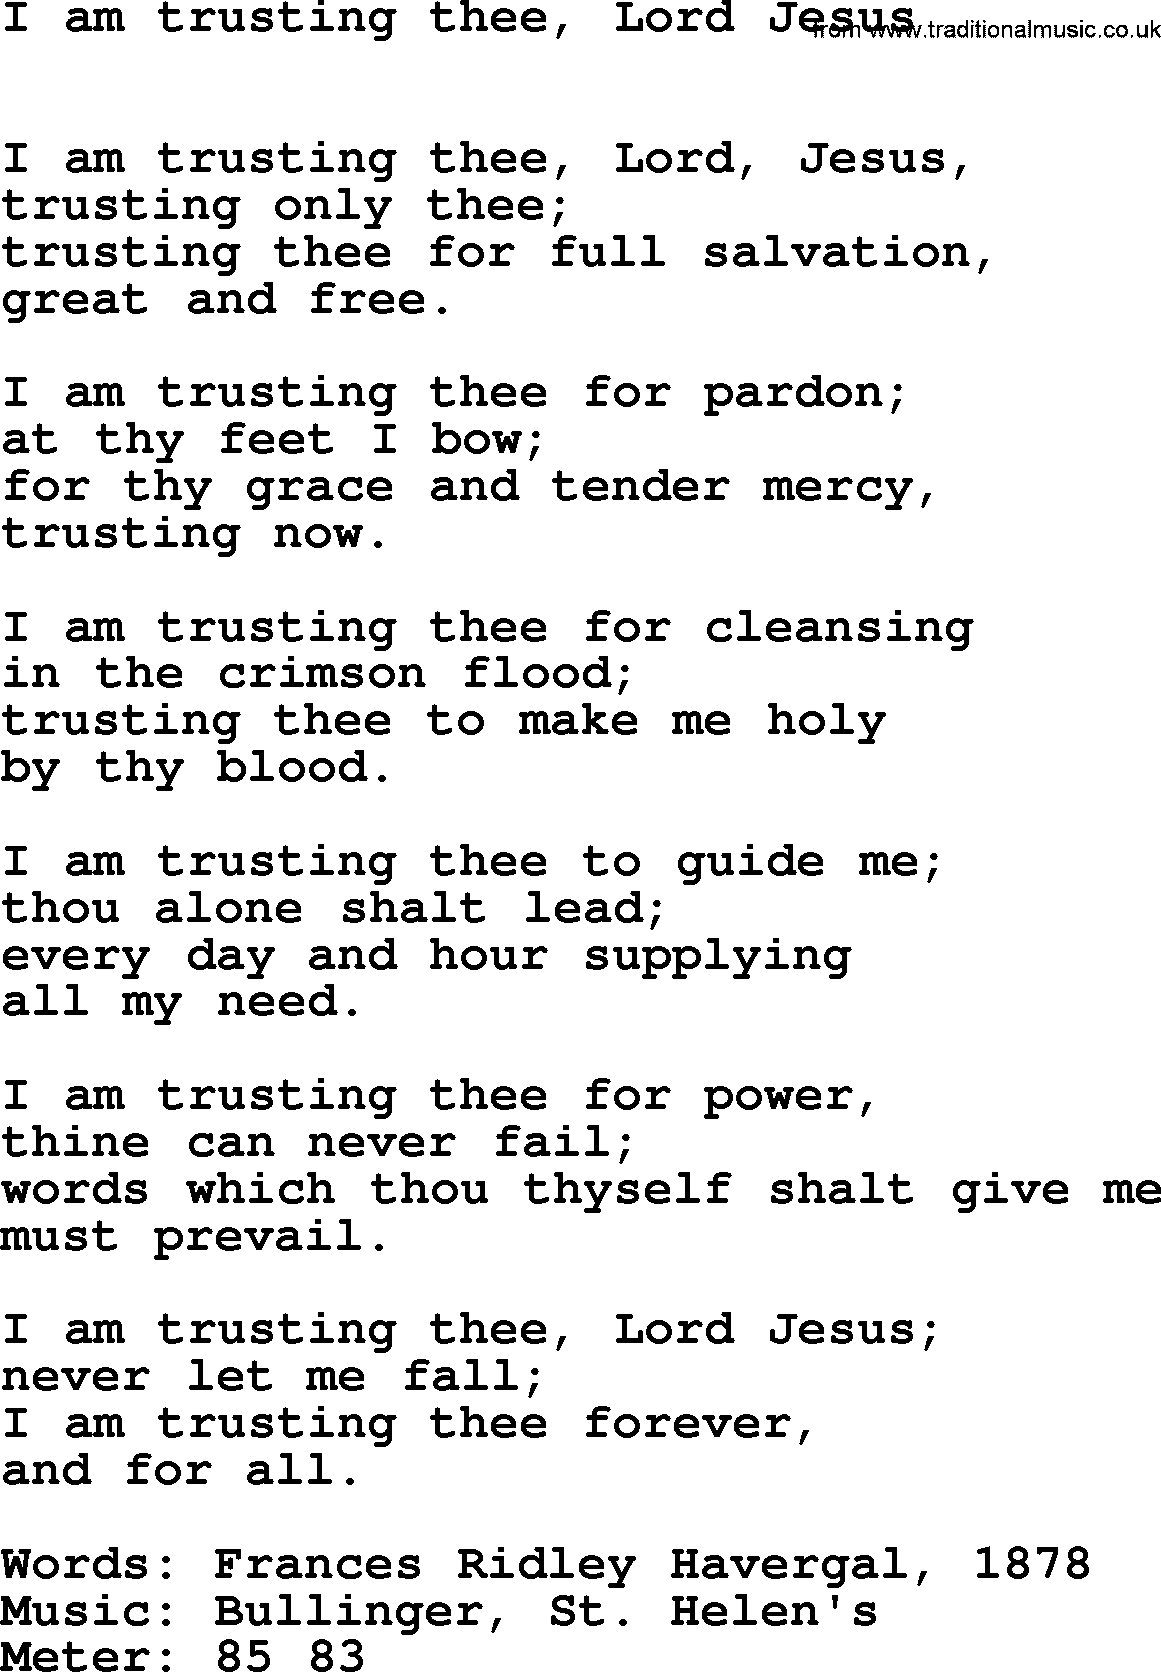 Book of Common Praise Hymn: I Am Trusting Thee, Lord Jesus.txt lyrics with midi music